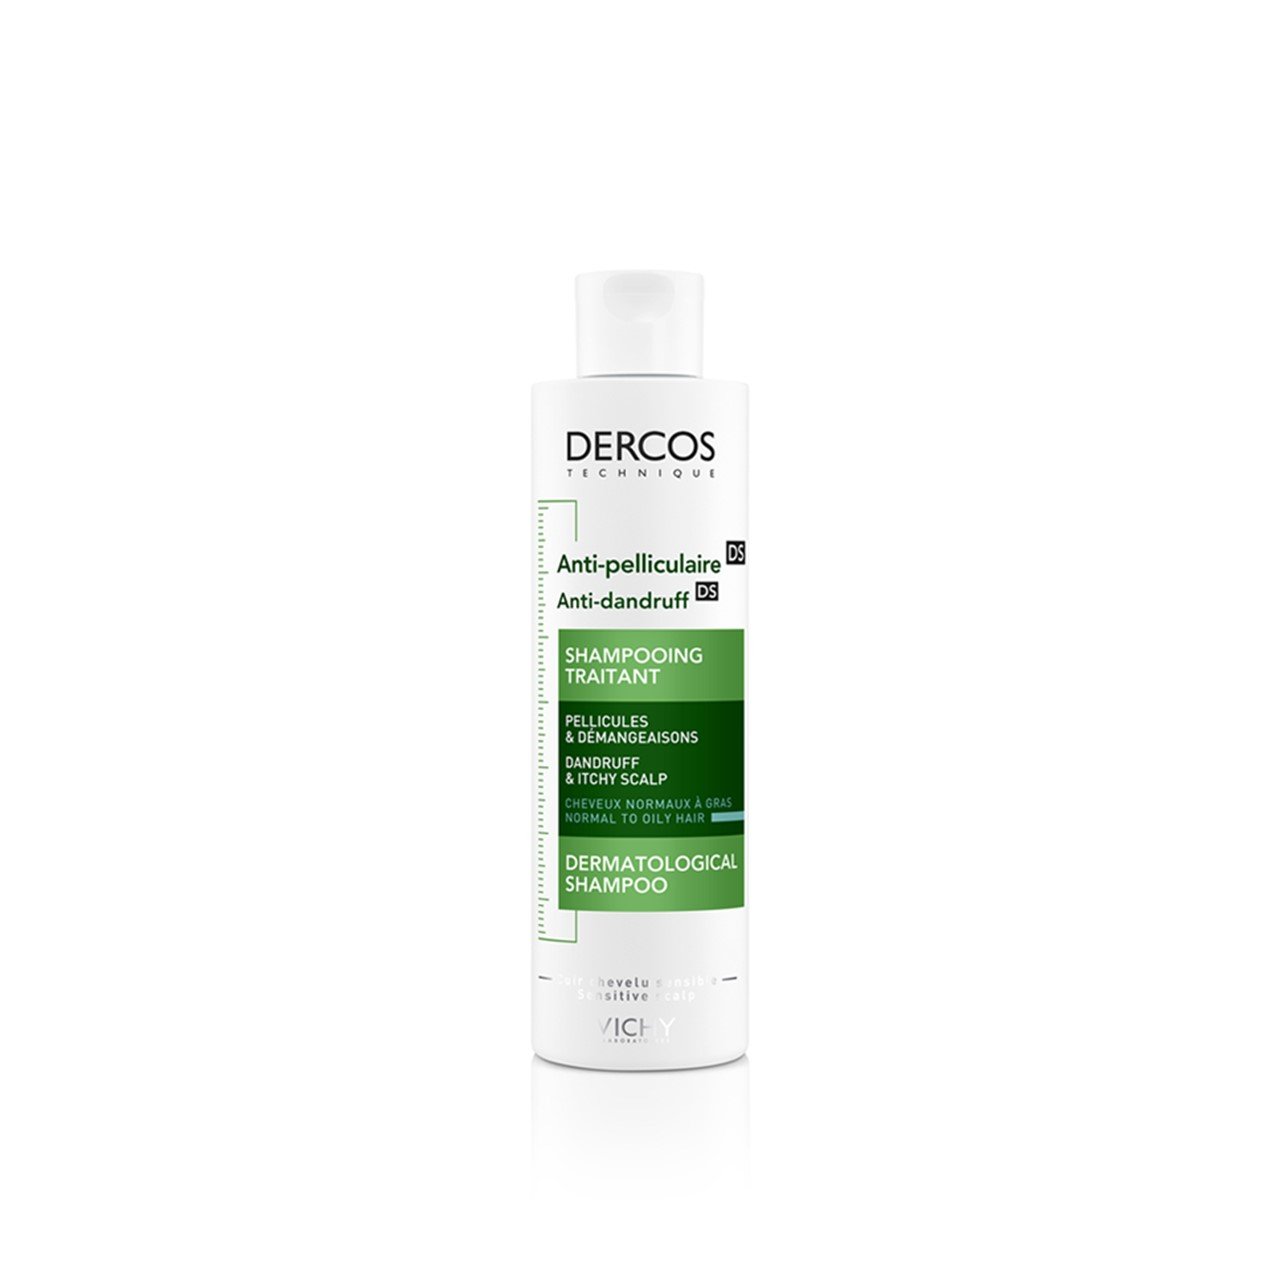 Vichy Dercos Anti-Dandruff DS Shampoo for Normal to Oily Hair 200ml (6.76fl oz)